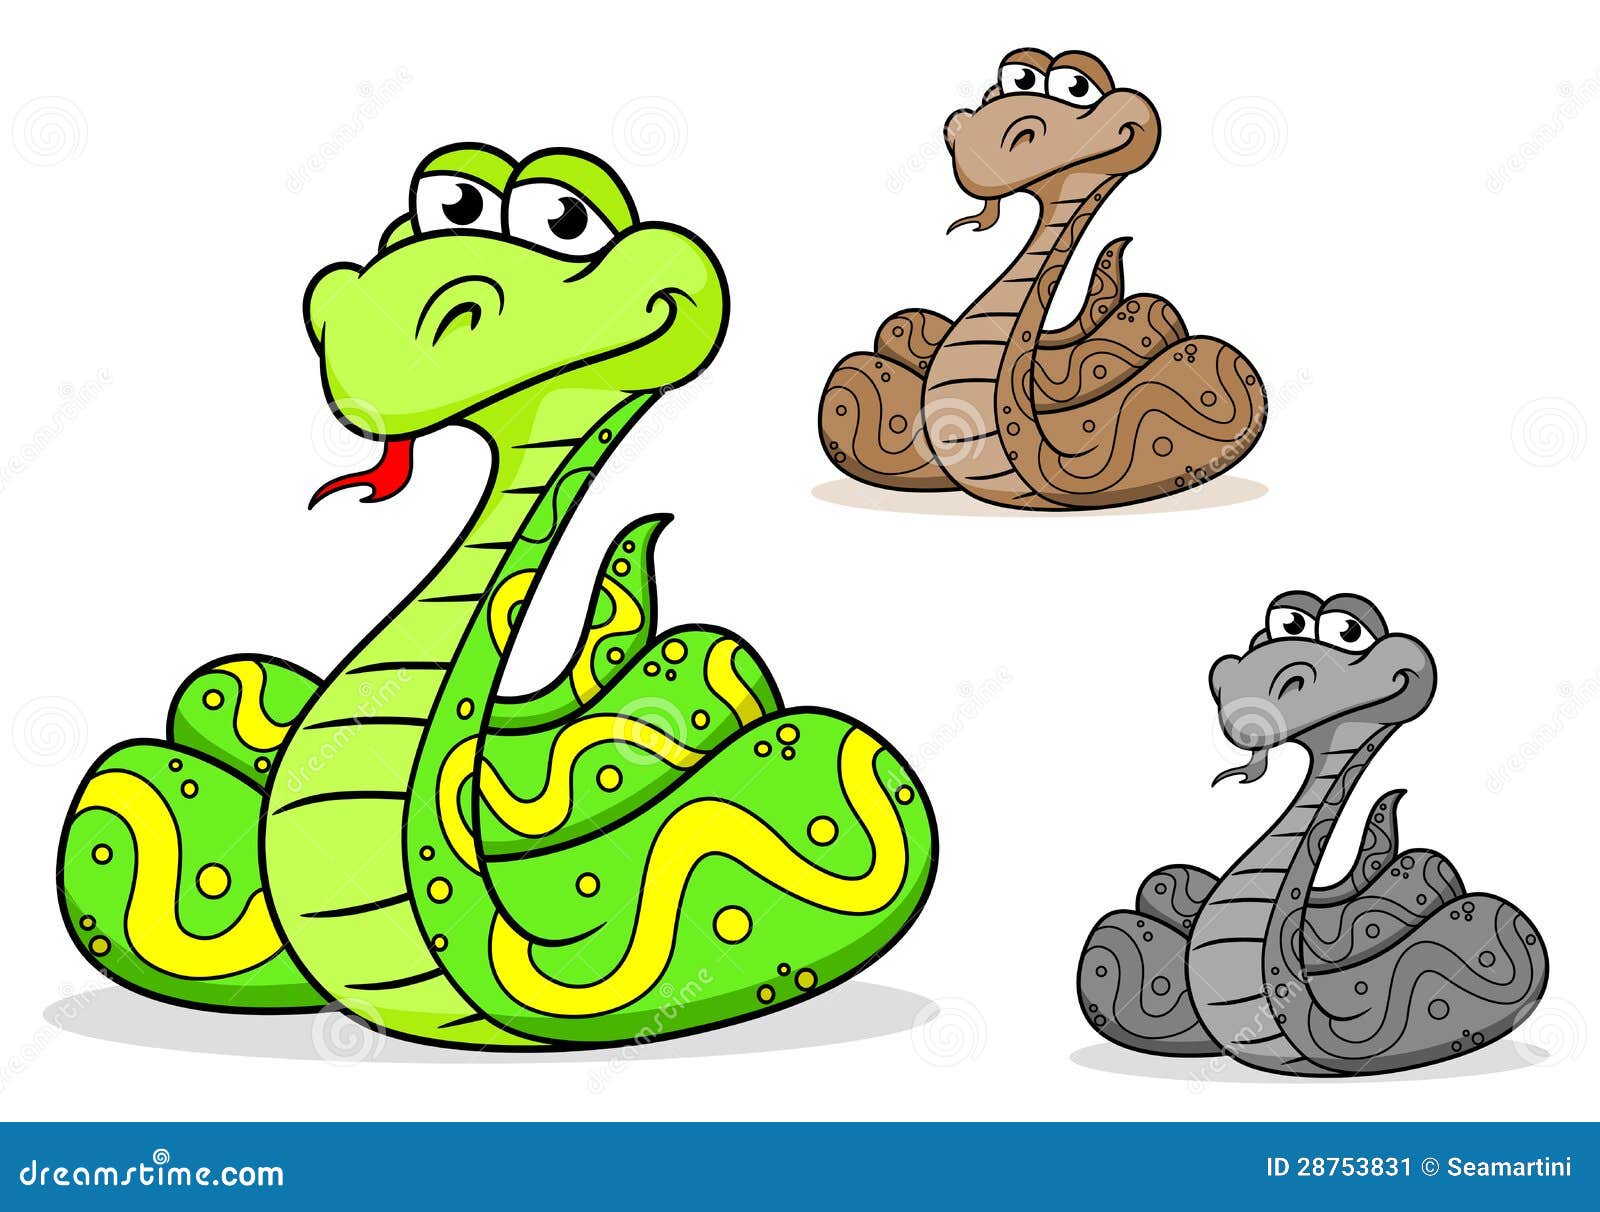 Cartoon python snake stock vector. Illustration of funny - 28753831